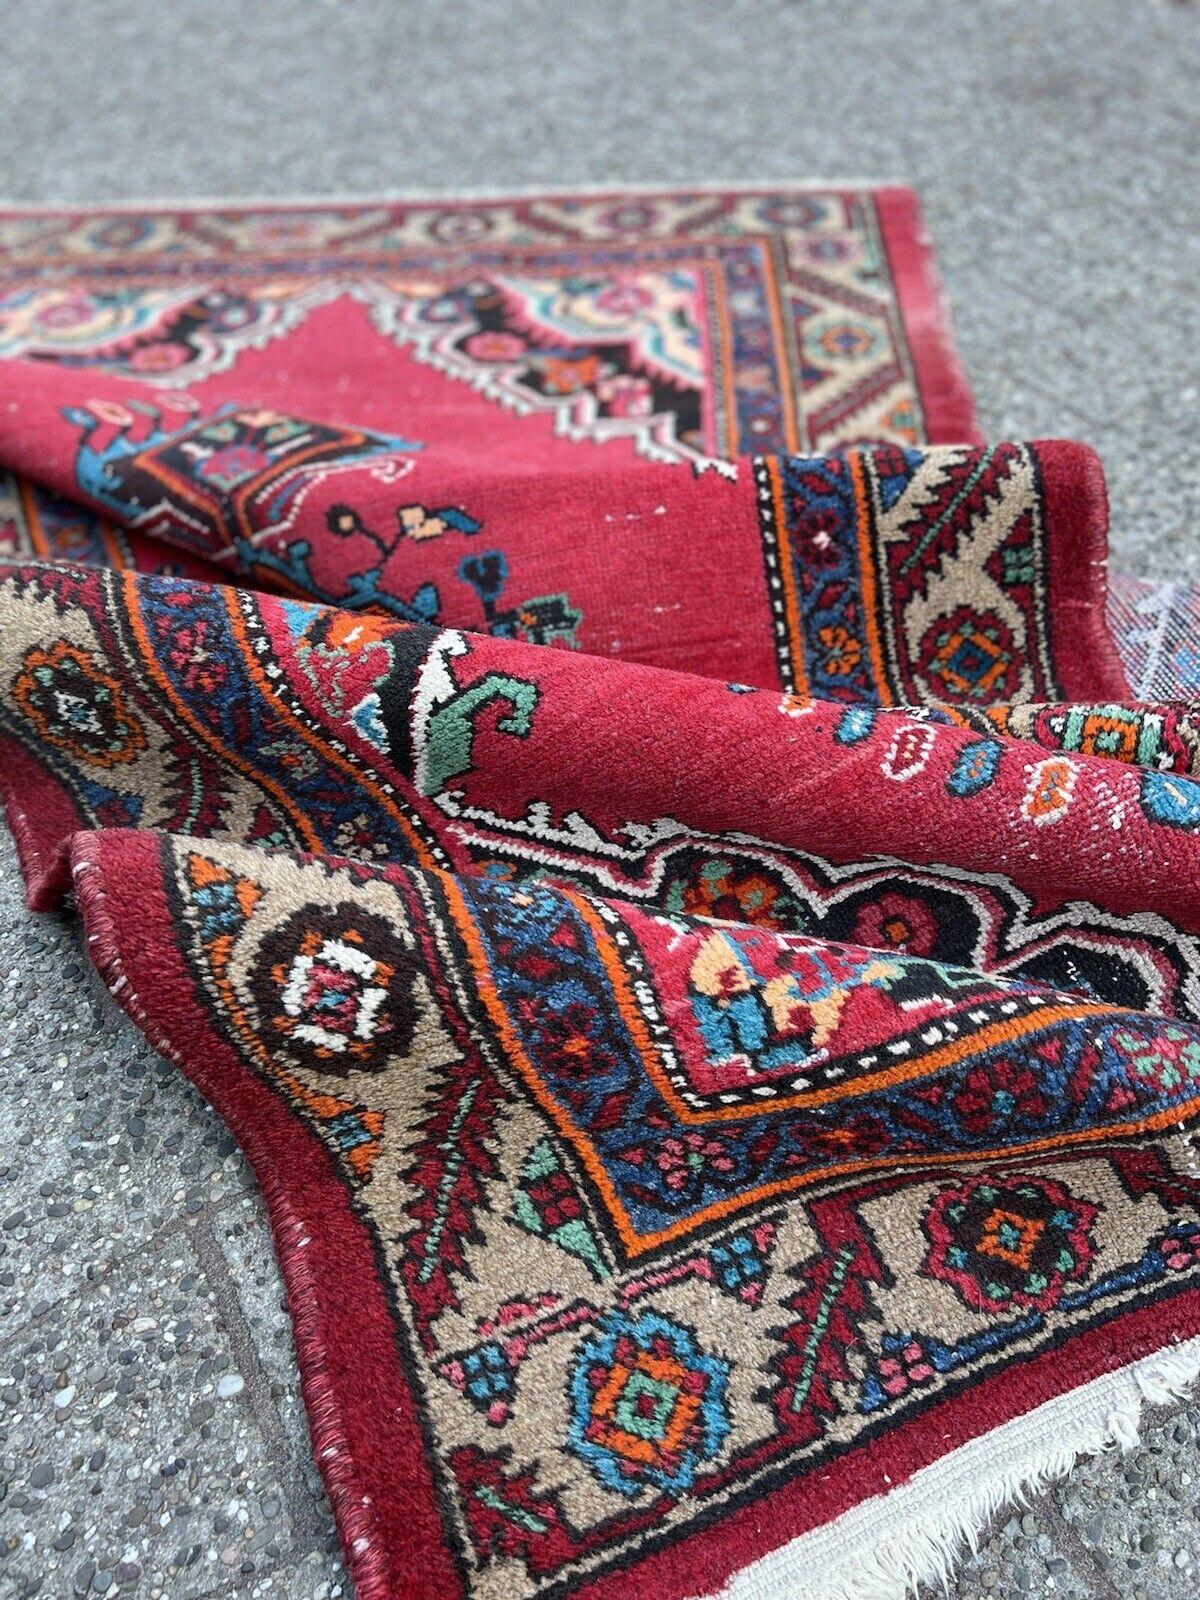 Wool Handmade Vintage Persian Style Hamadan Rug 3.8' x 6.6', 1950s - 1S48 For Sale